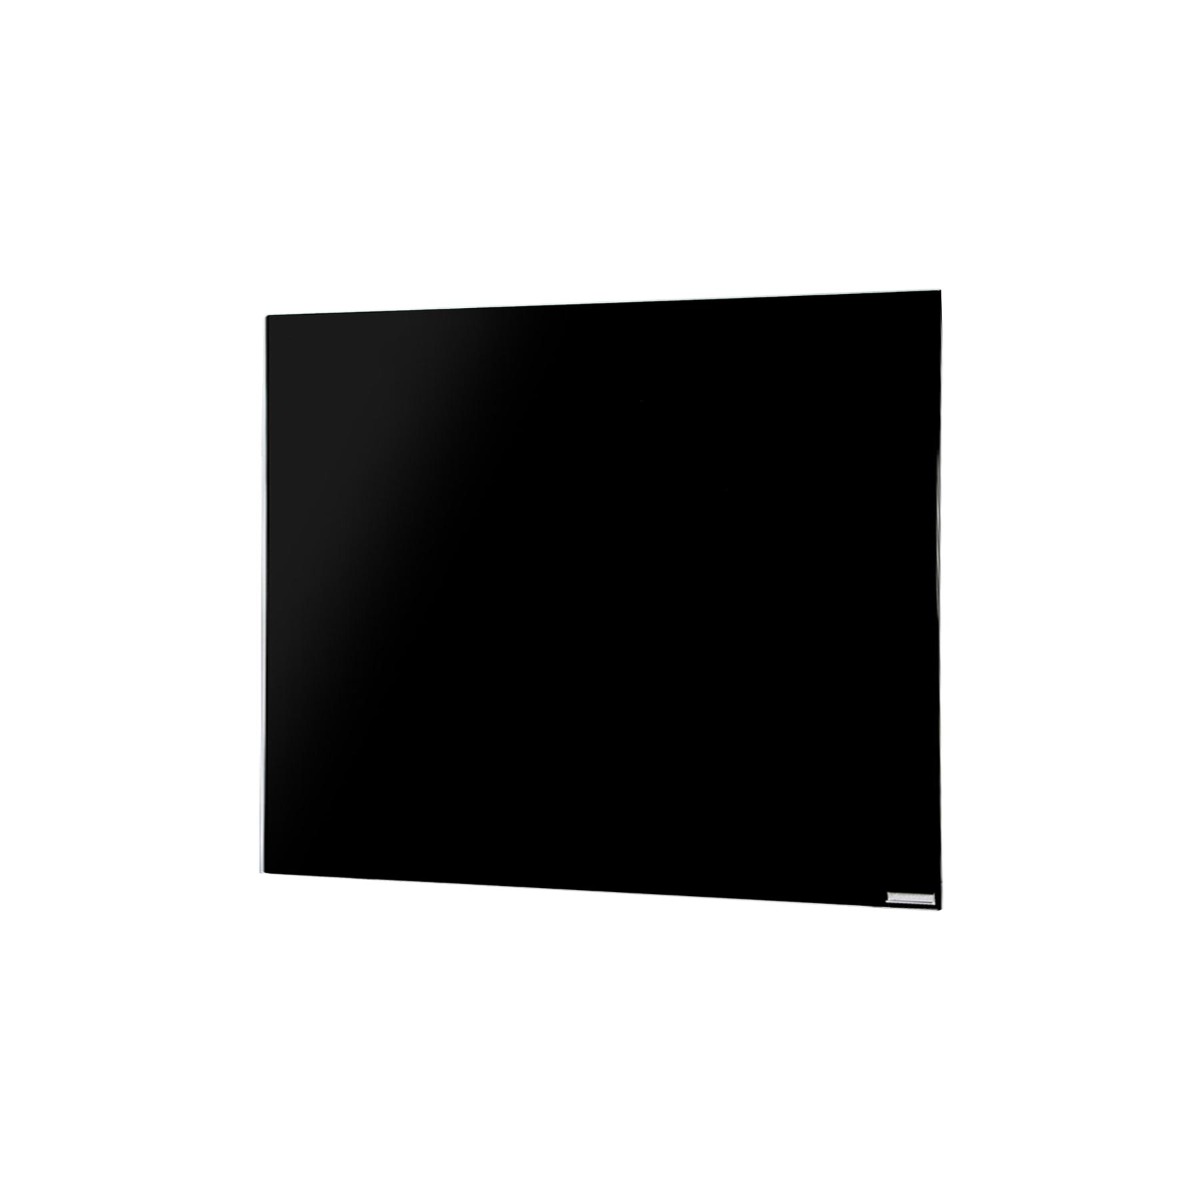 Herschel Inspire Glass Infrared Heating Panel - Black 750w (900 x 700mm)